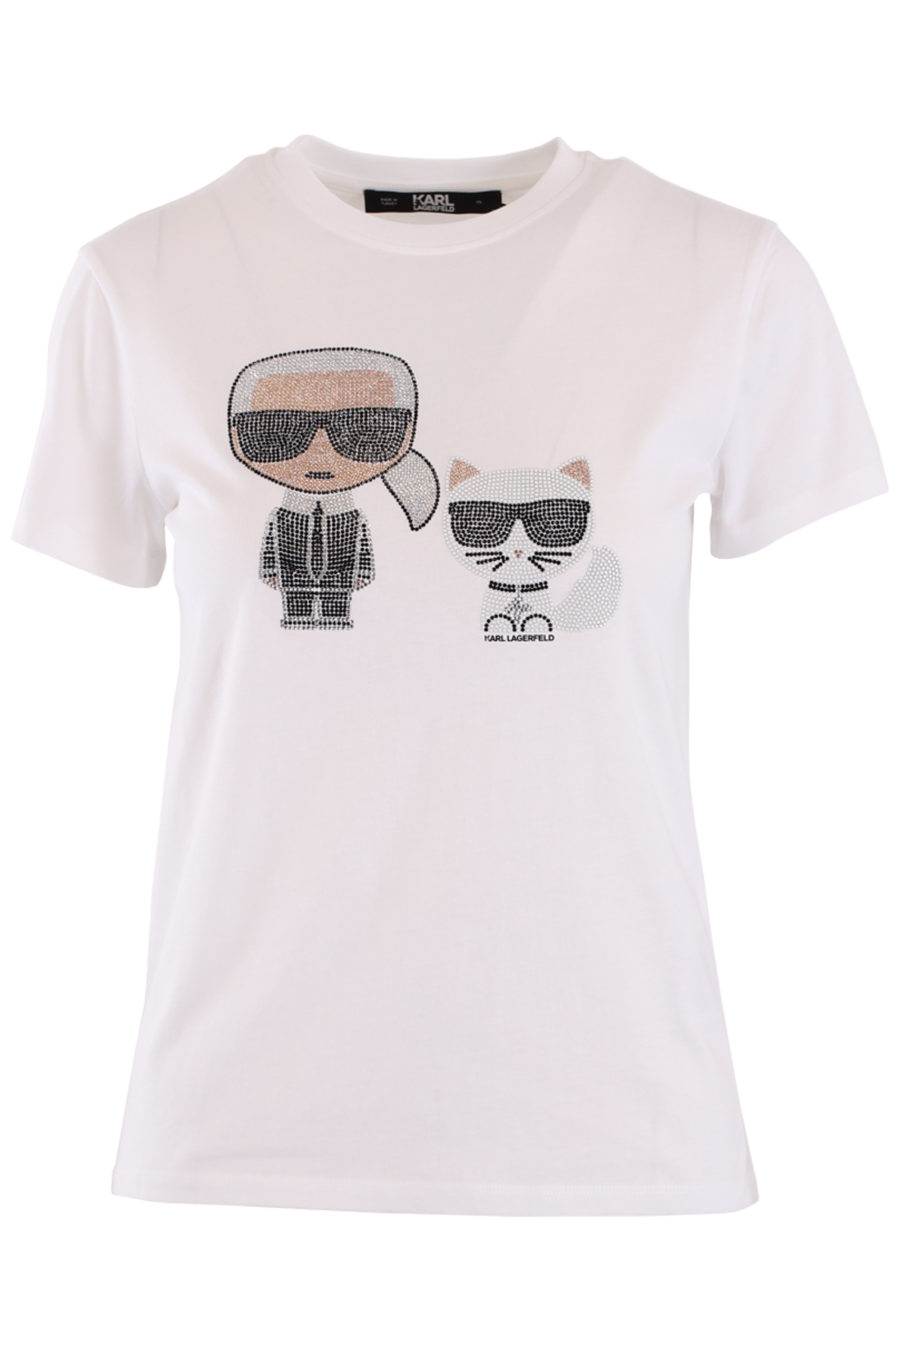 Camiseta blanca con logo "ikonik karl y choupette" en strass - IMG 8972